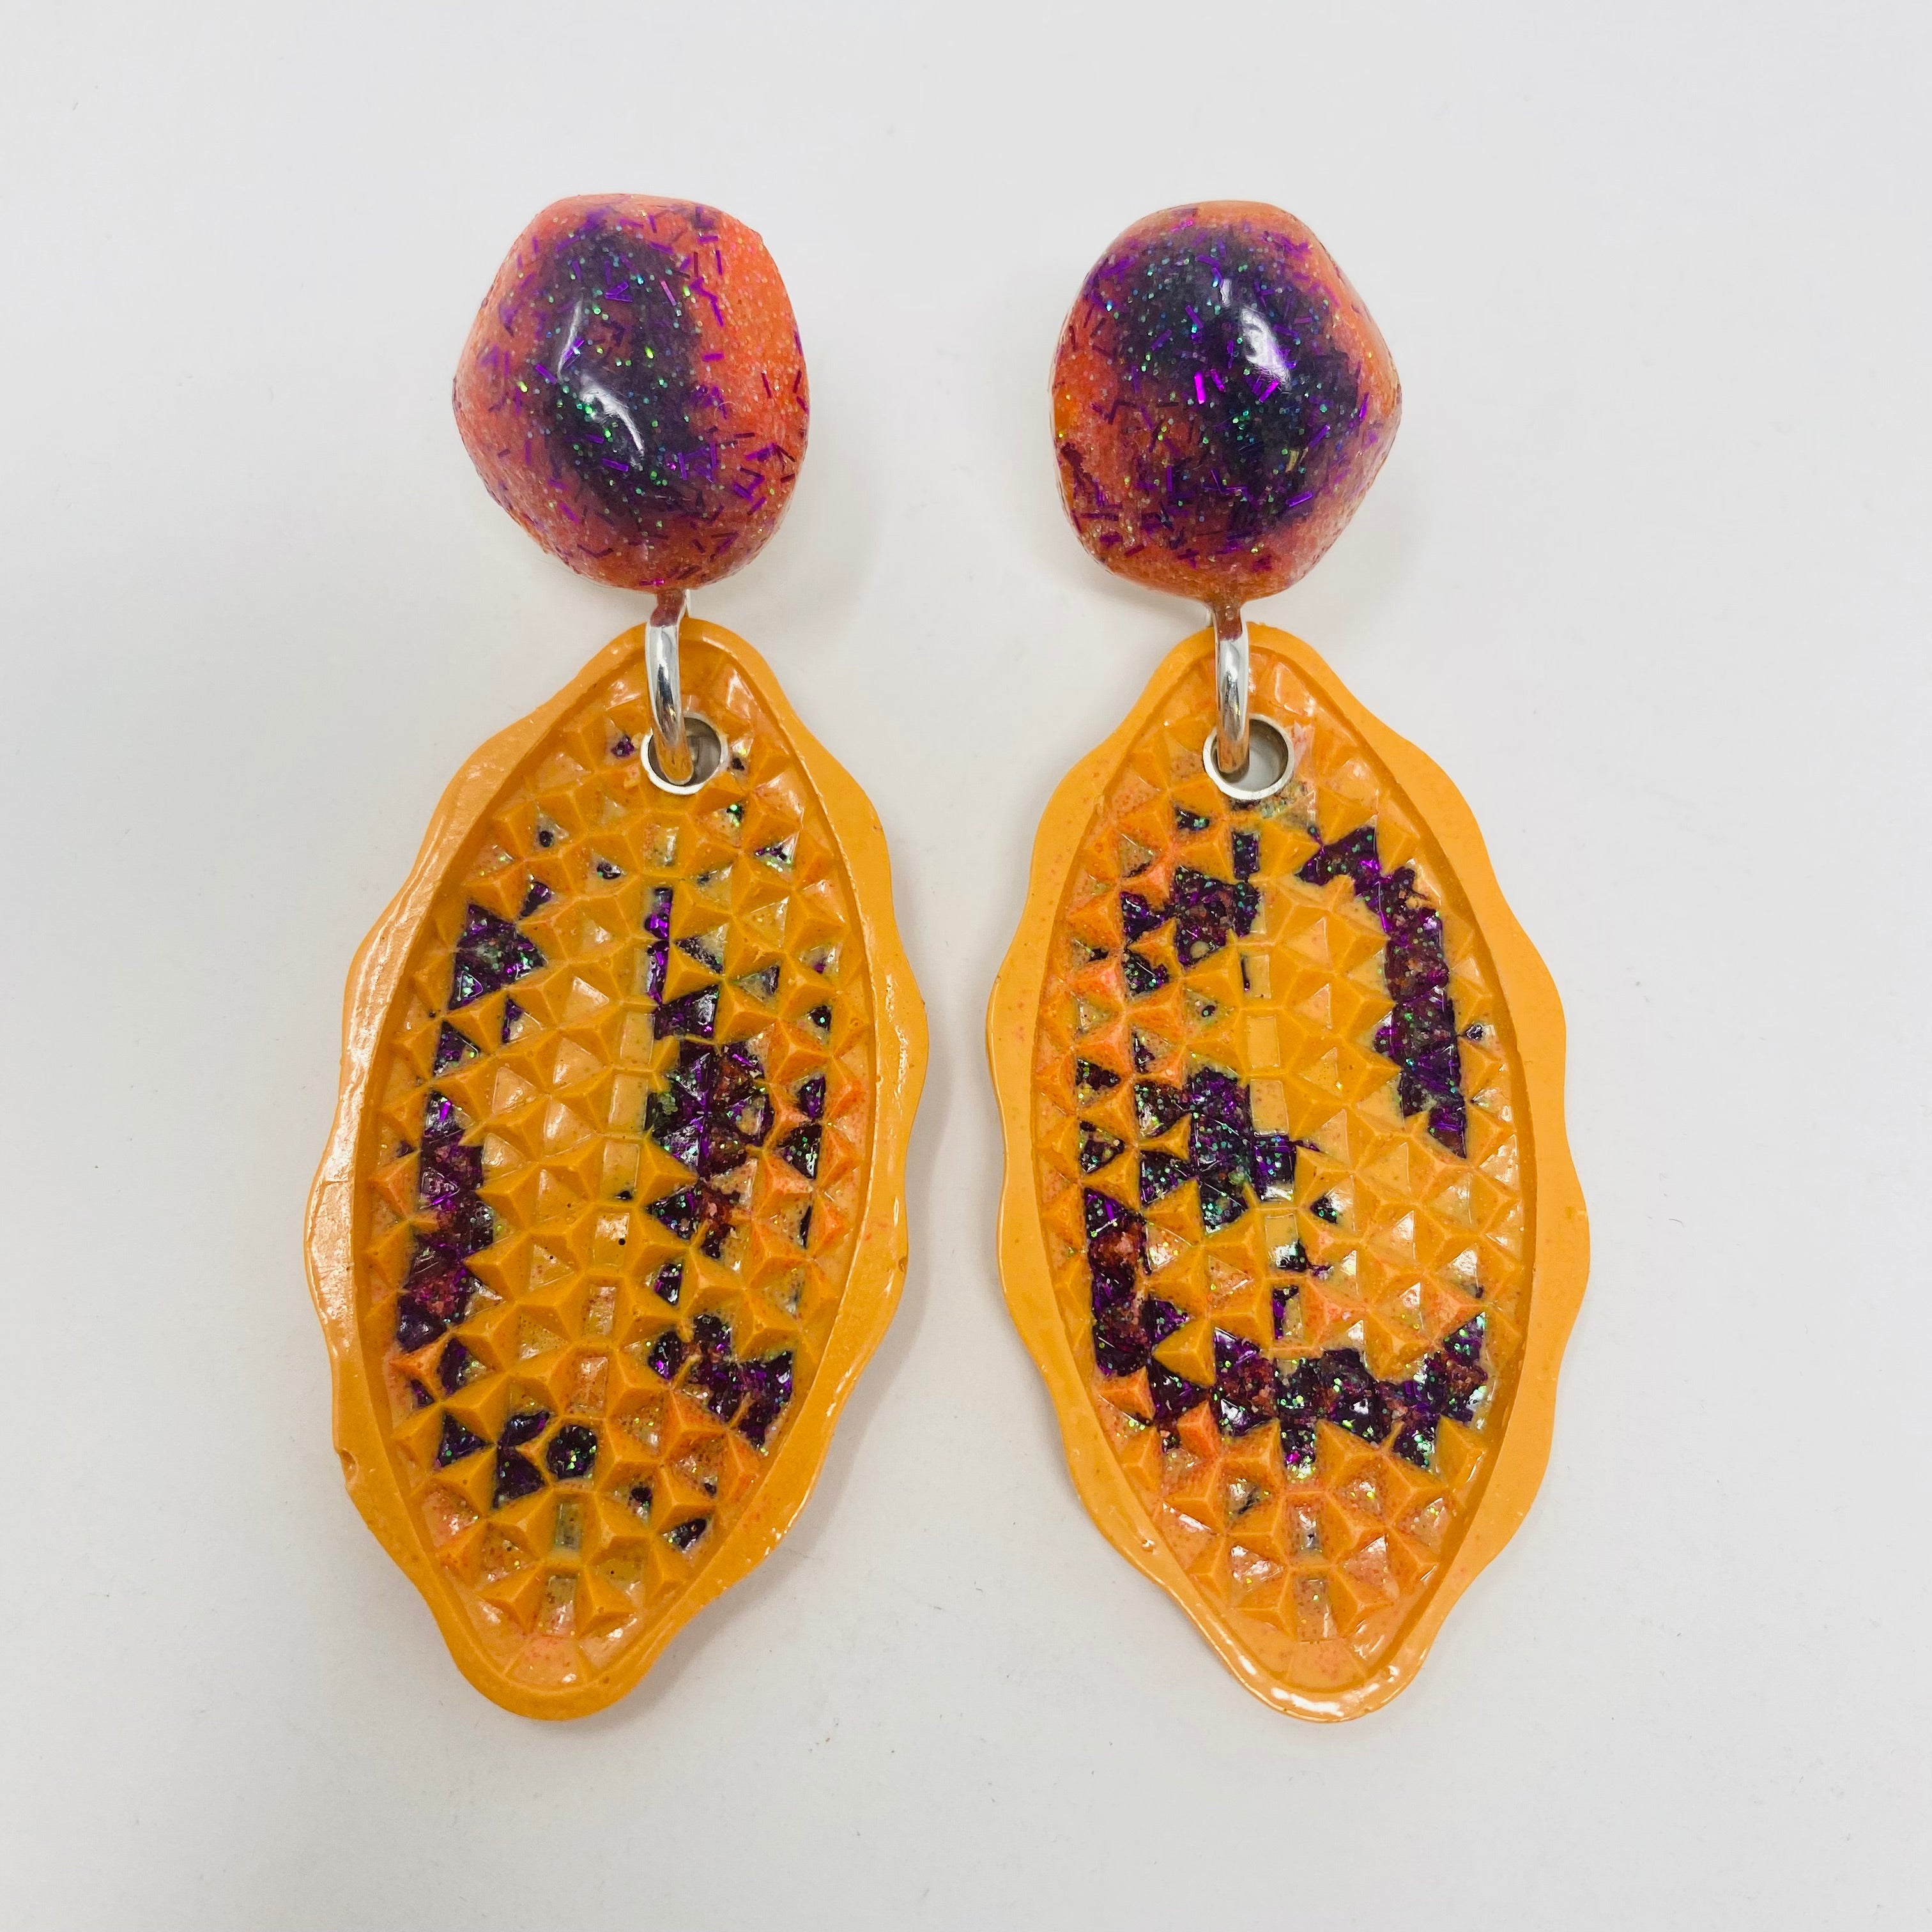 Cateye Earrings, bright orange, purple and glitter